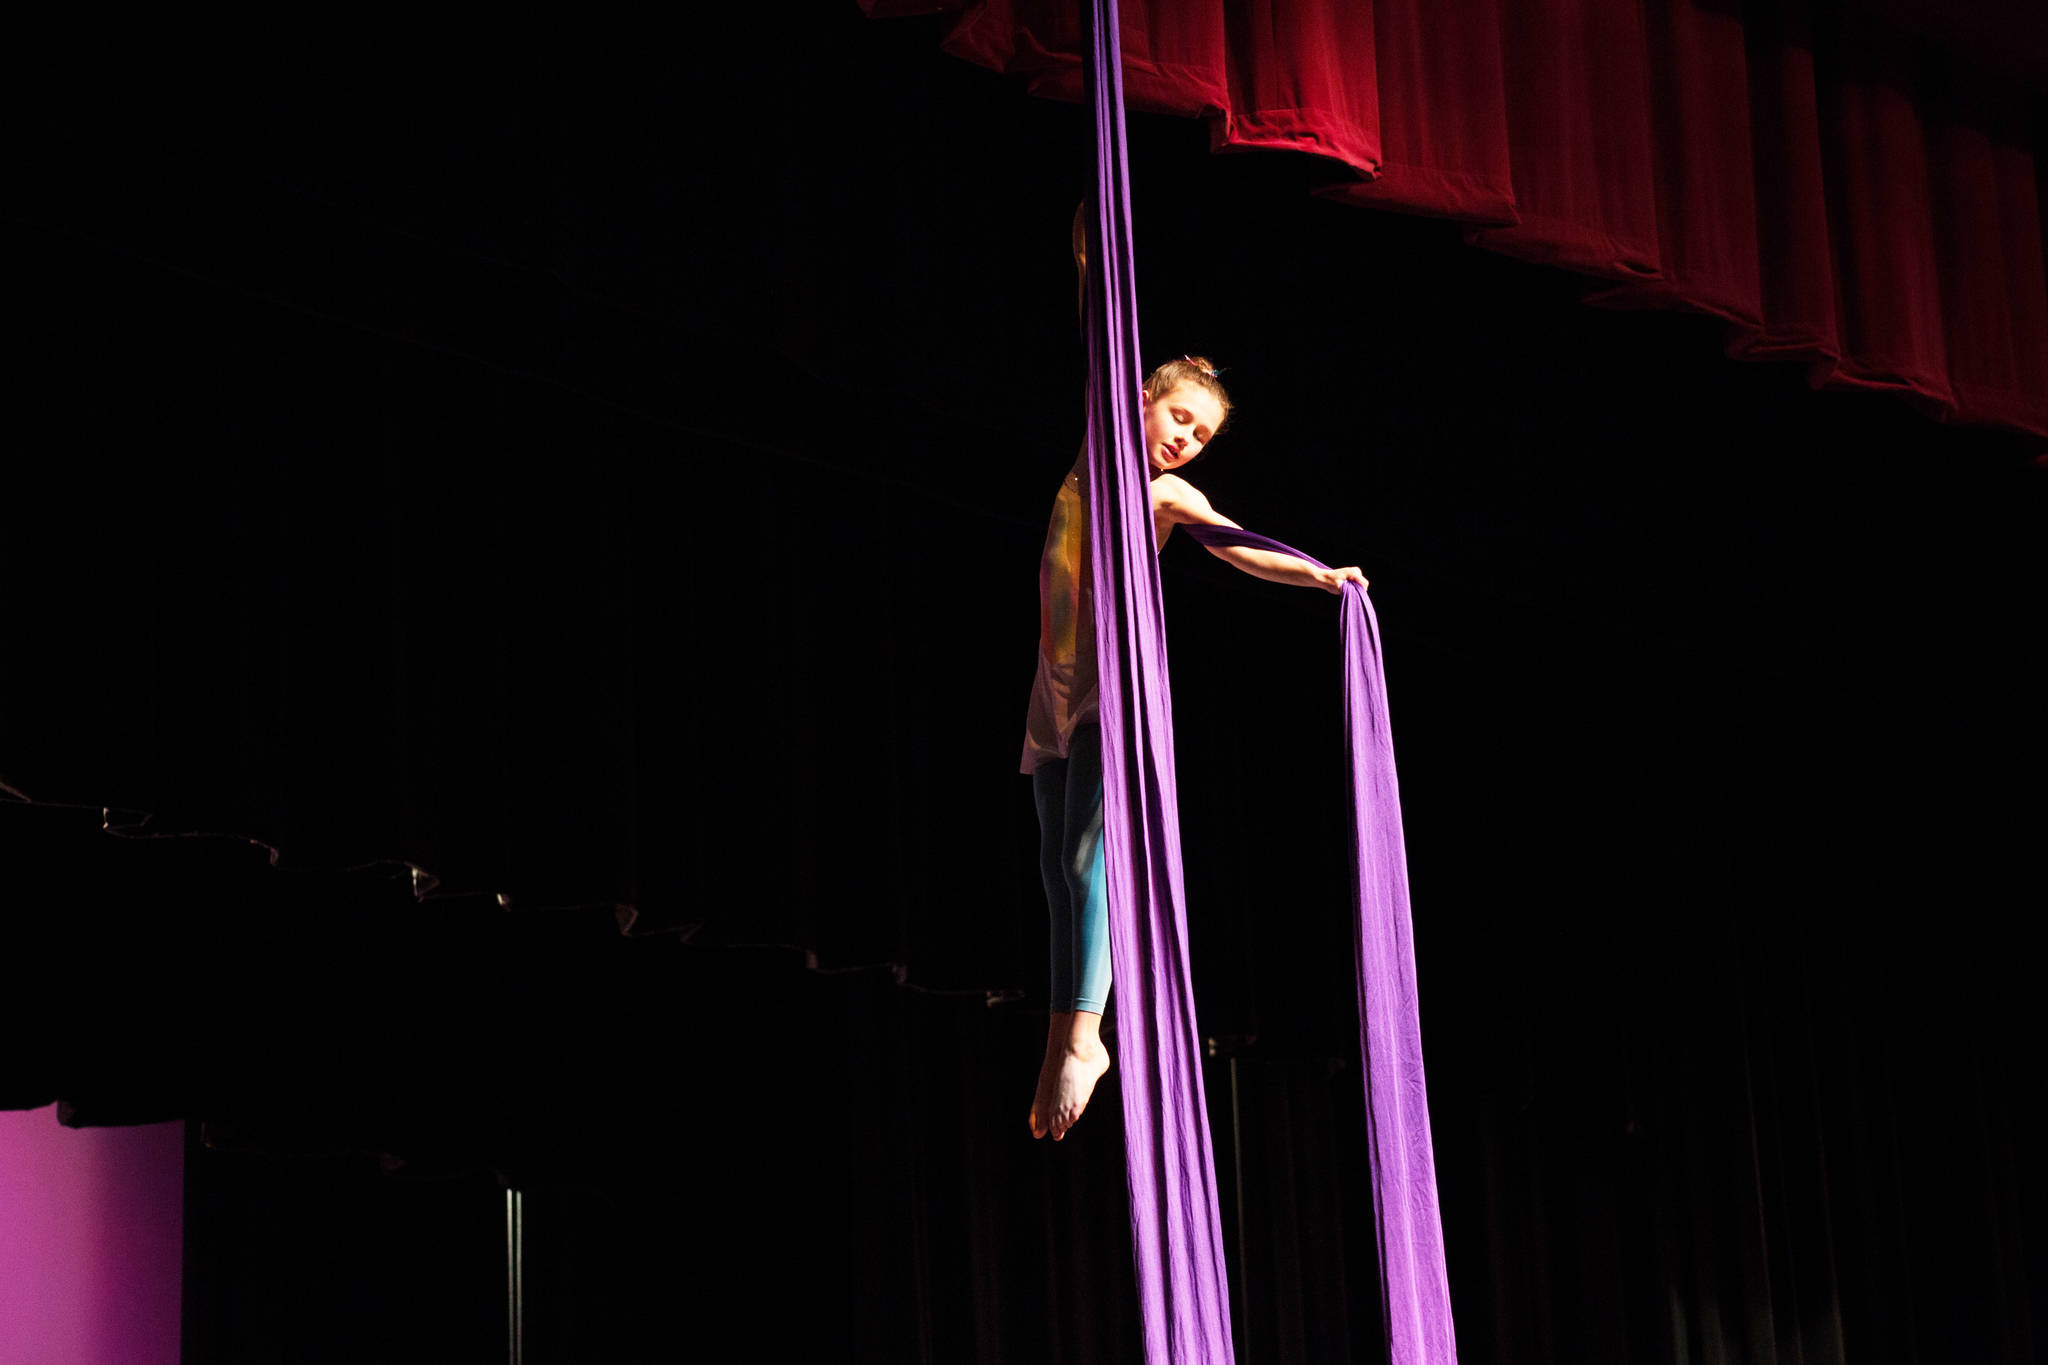 silks performer is Ireland Styvar performs aerial silks at the 2016 Jubilee. (Photo provided)